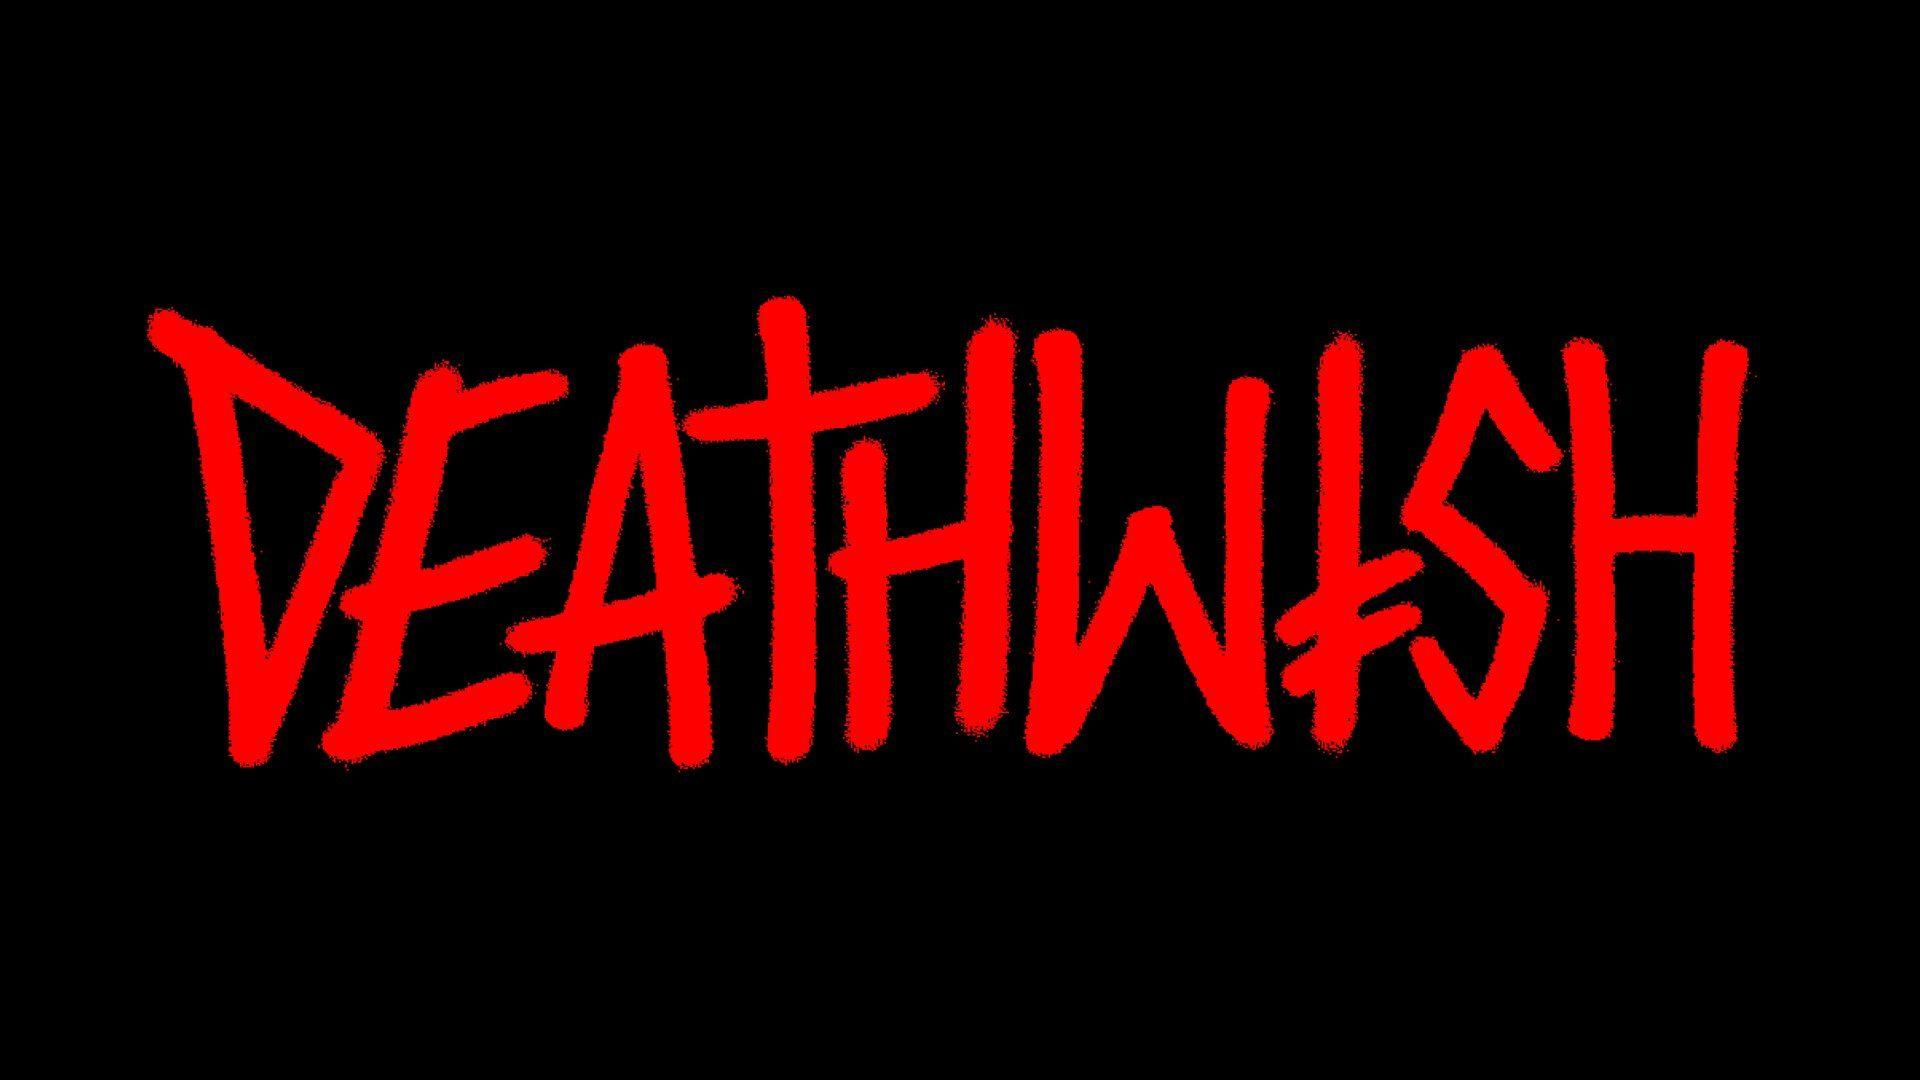 Death Wish Skate Logo - Deathwish skateboards wallpaper